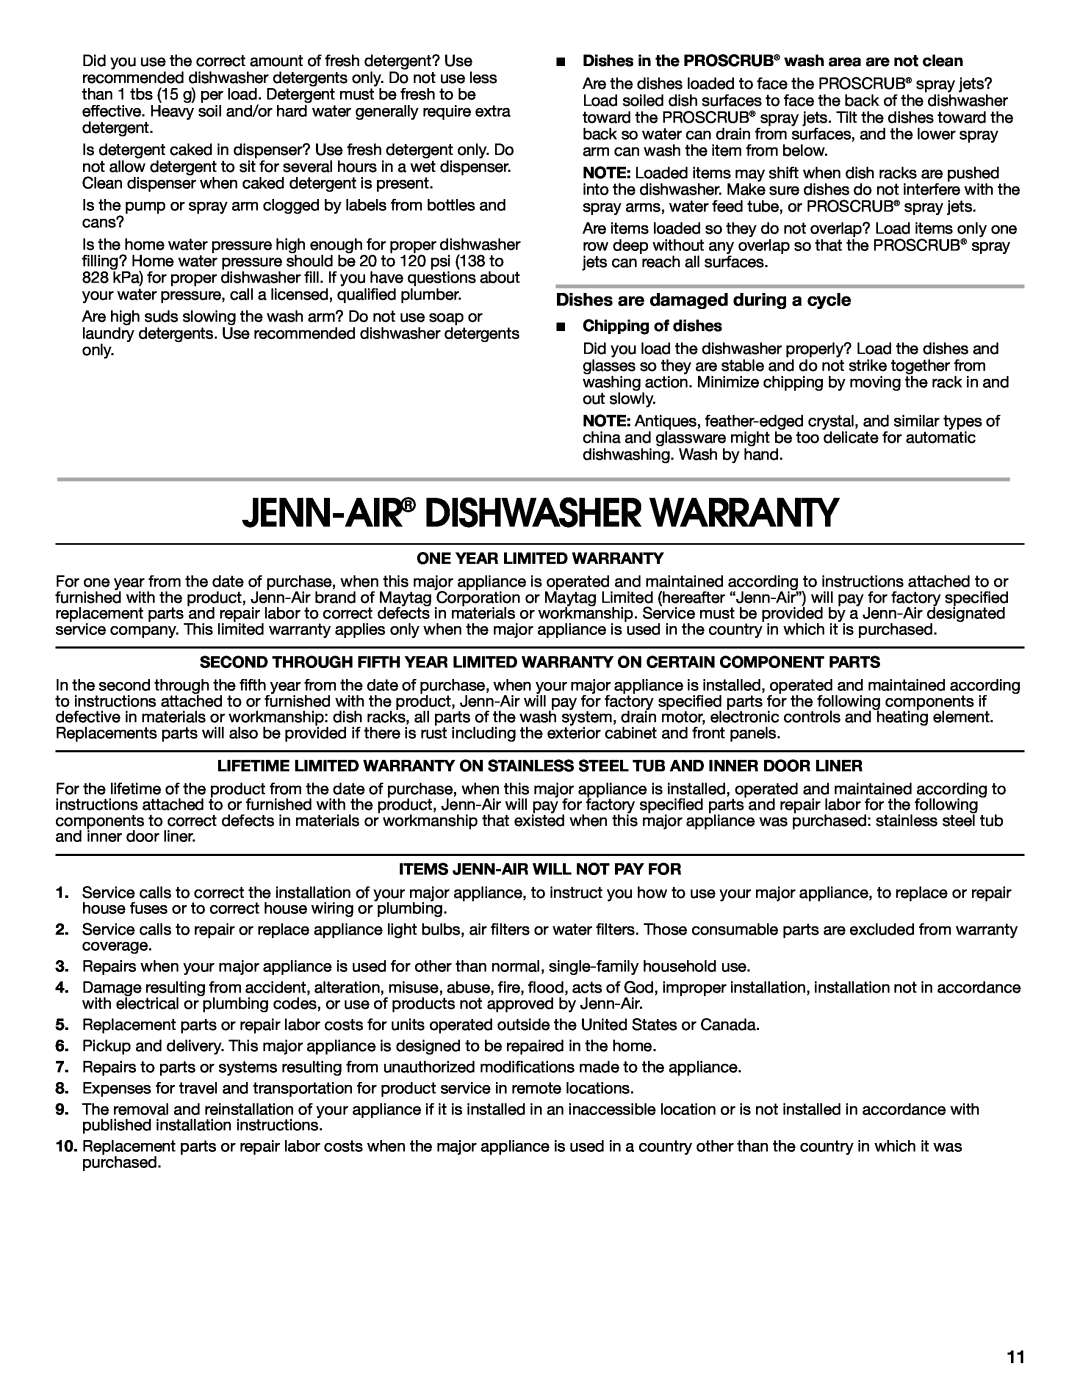 Jenn-Air W10300216A warranty Jenn-Air Dishwasher Warranty, Dishes are damaged during a cycle 